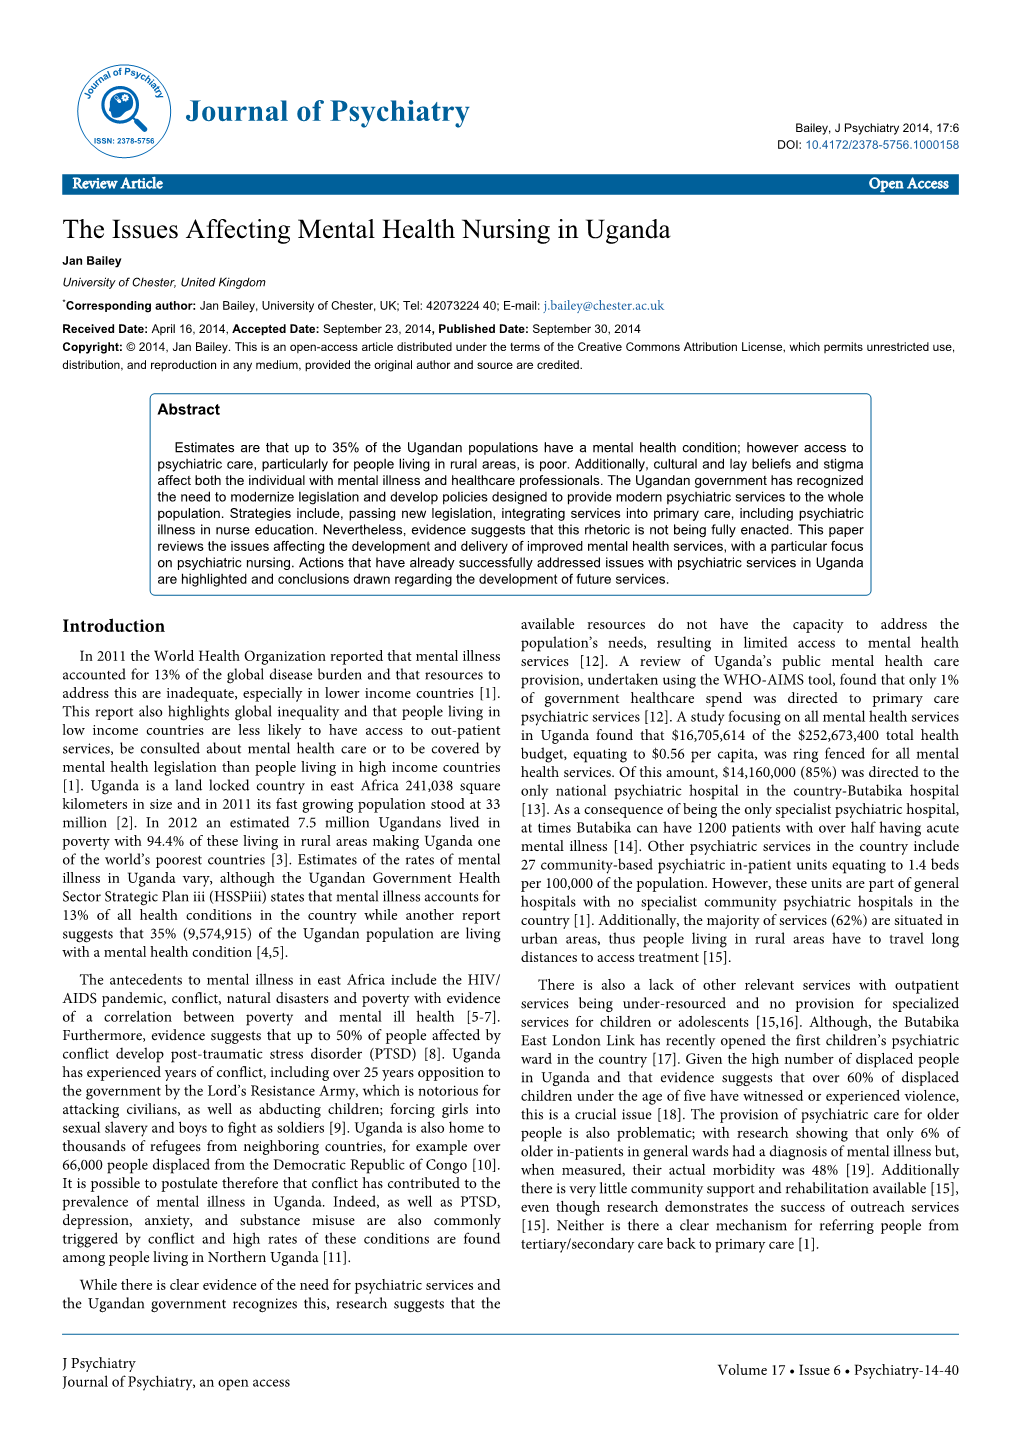 The Issues Affecting Mental Health Nursing in Uganda